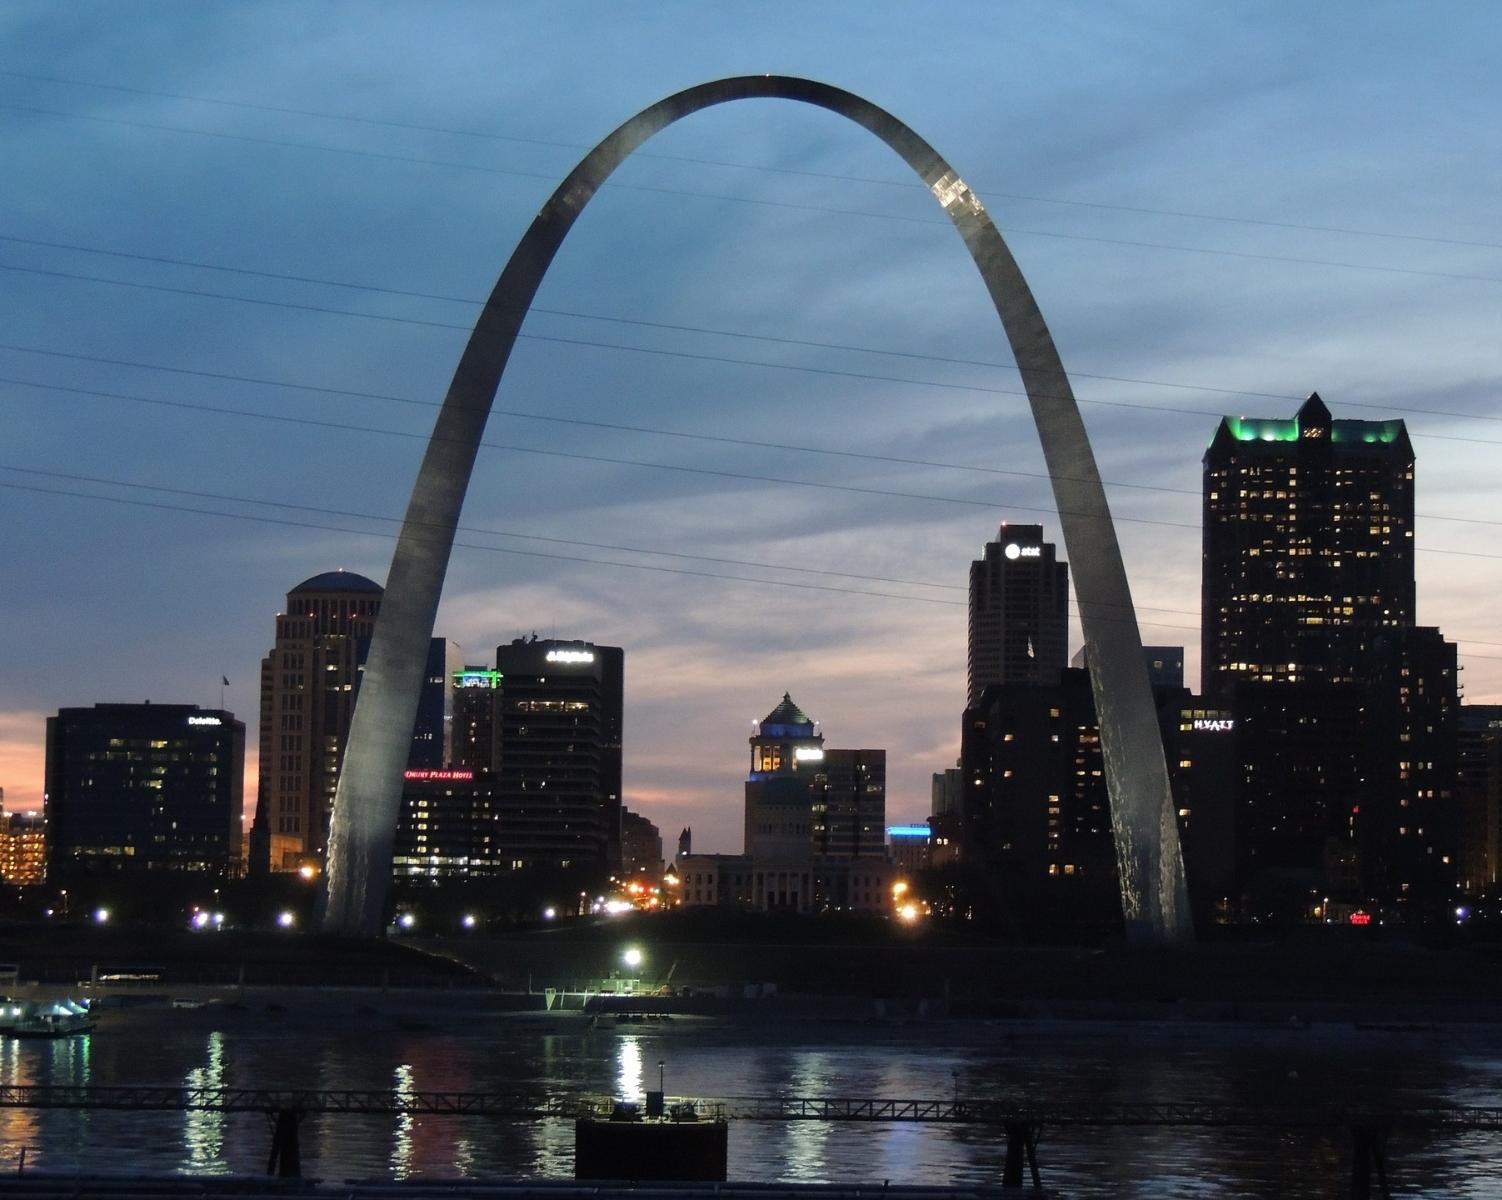 6. The Gateway Arch – St. Louis, Missouri, USA